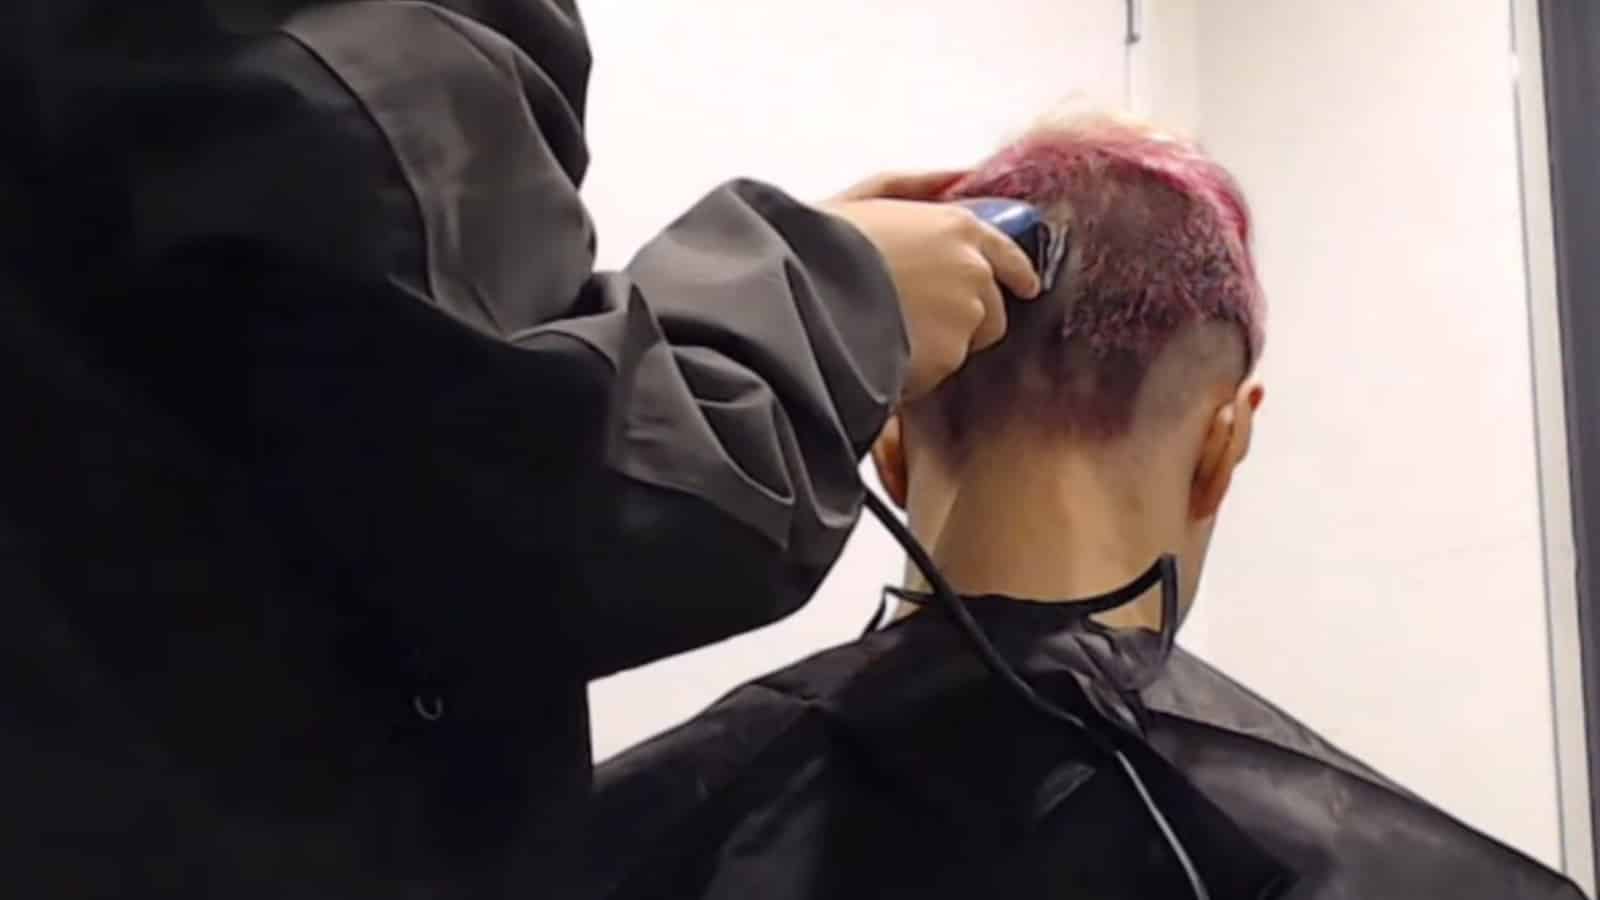 twitch streamer PiG shaving his head